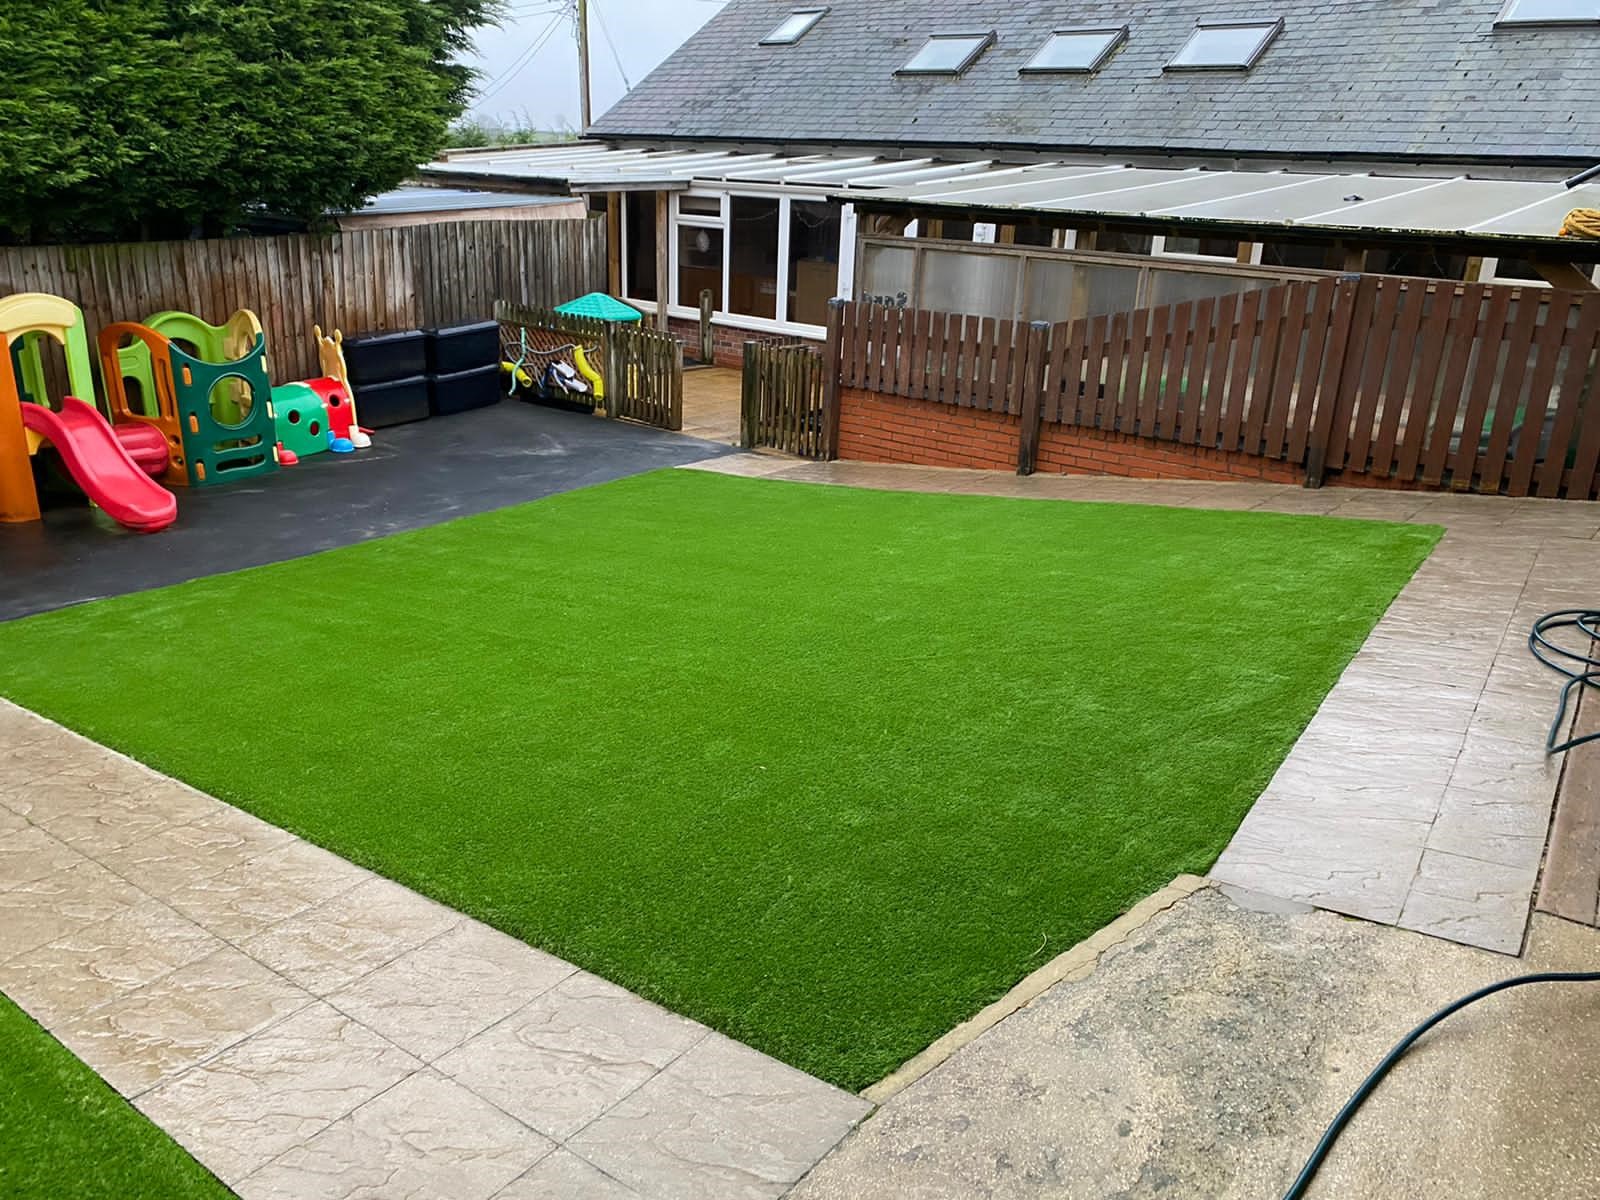 Ashdon Nursery School: Belgravia Grass install